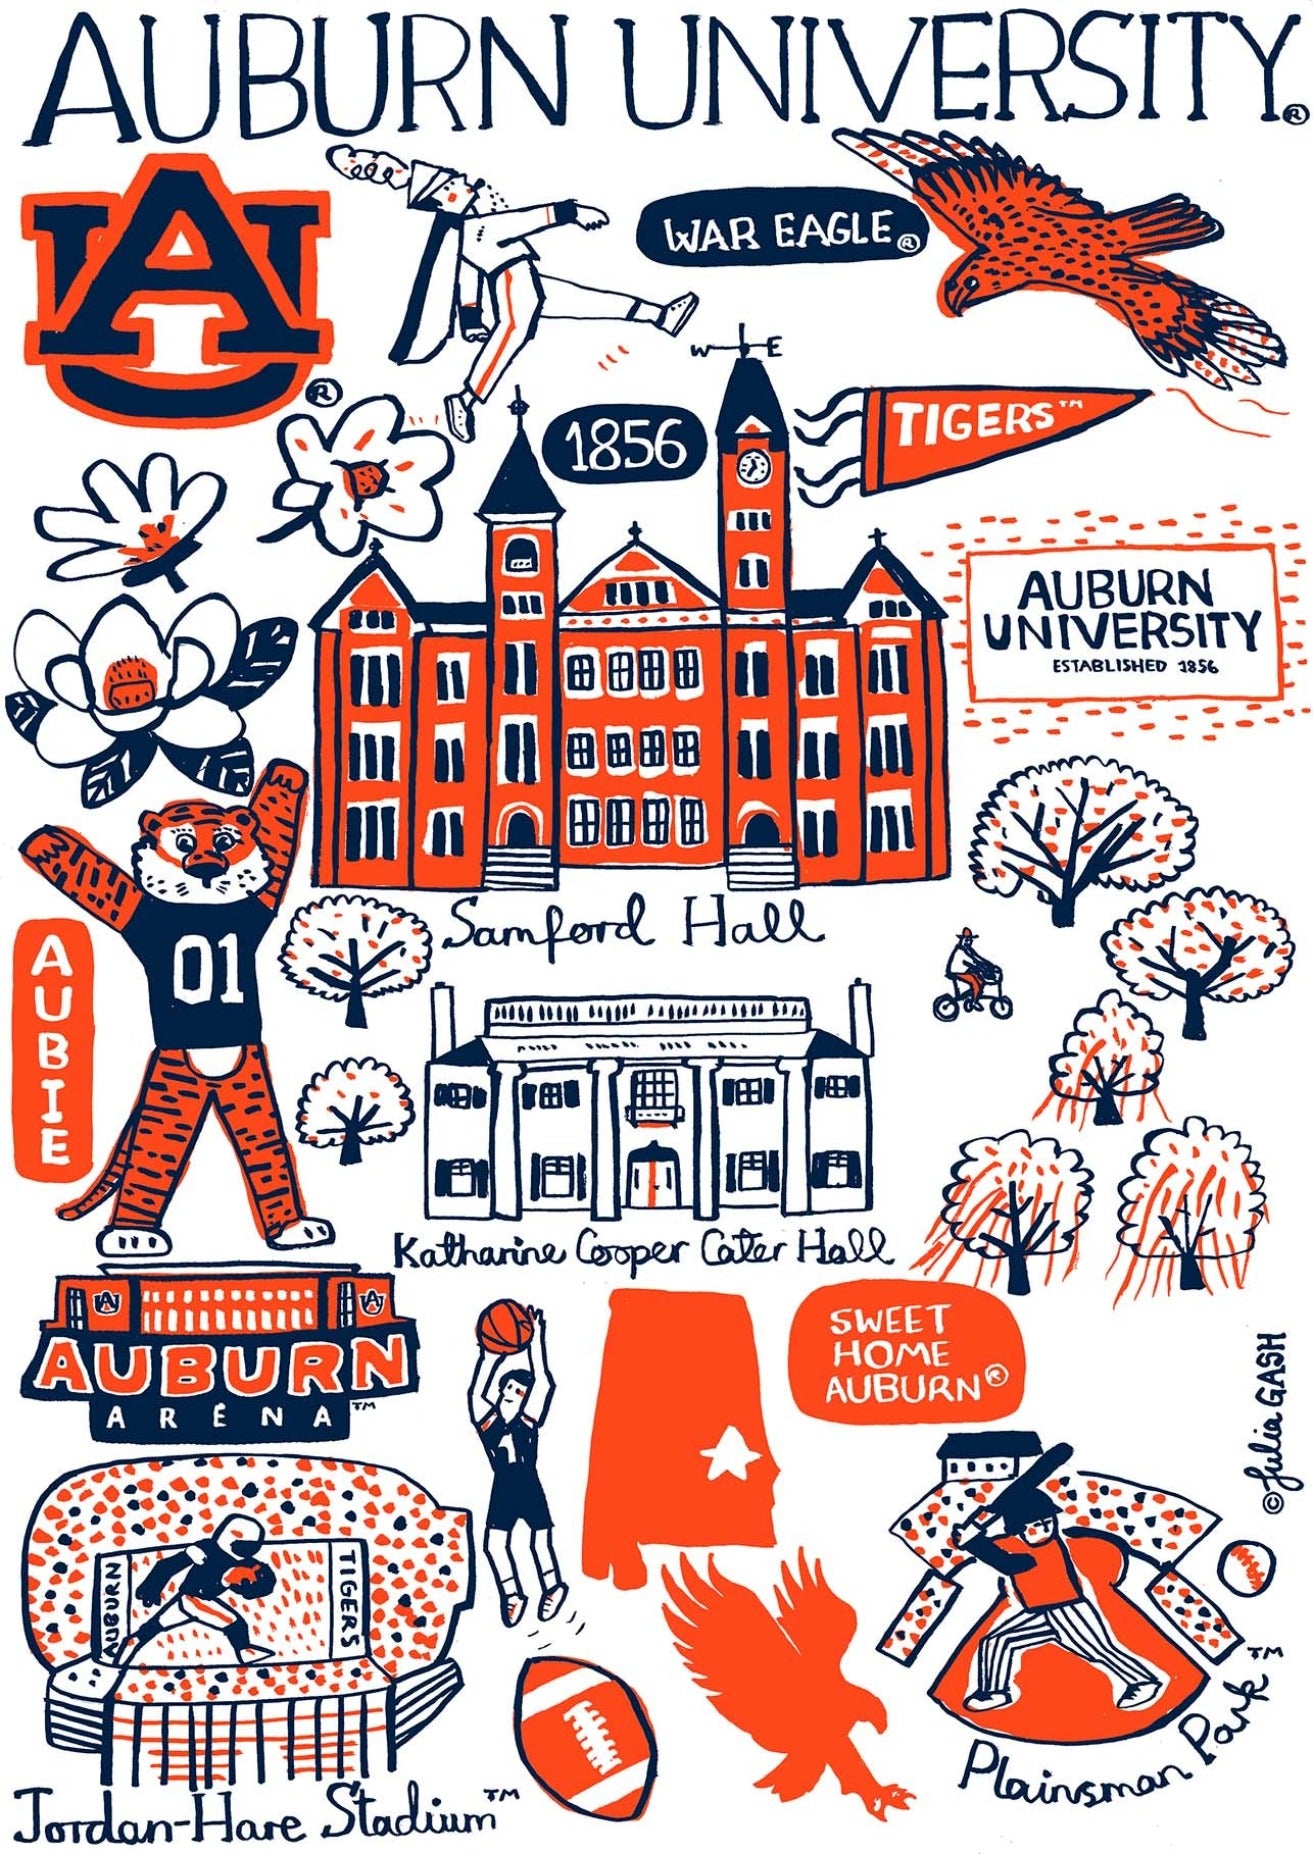 Auburn University Design by Julia Gash